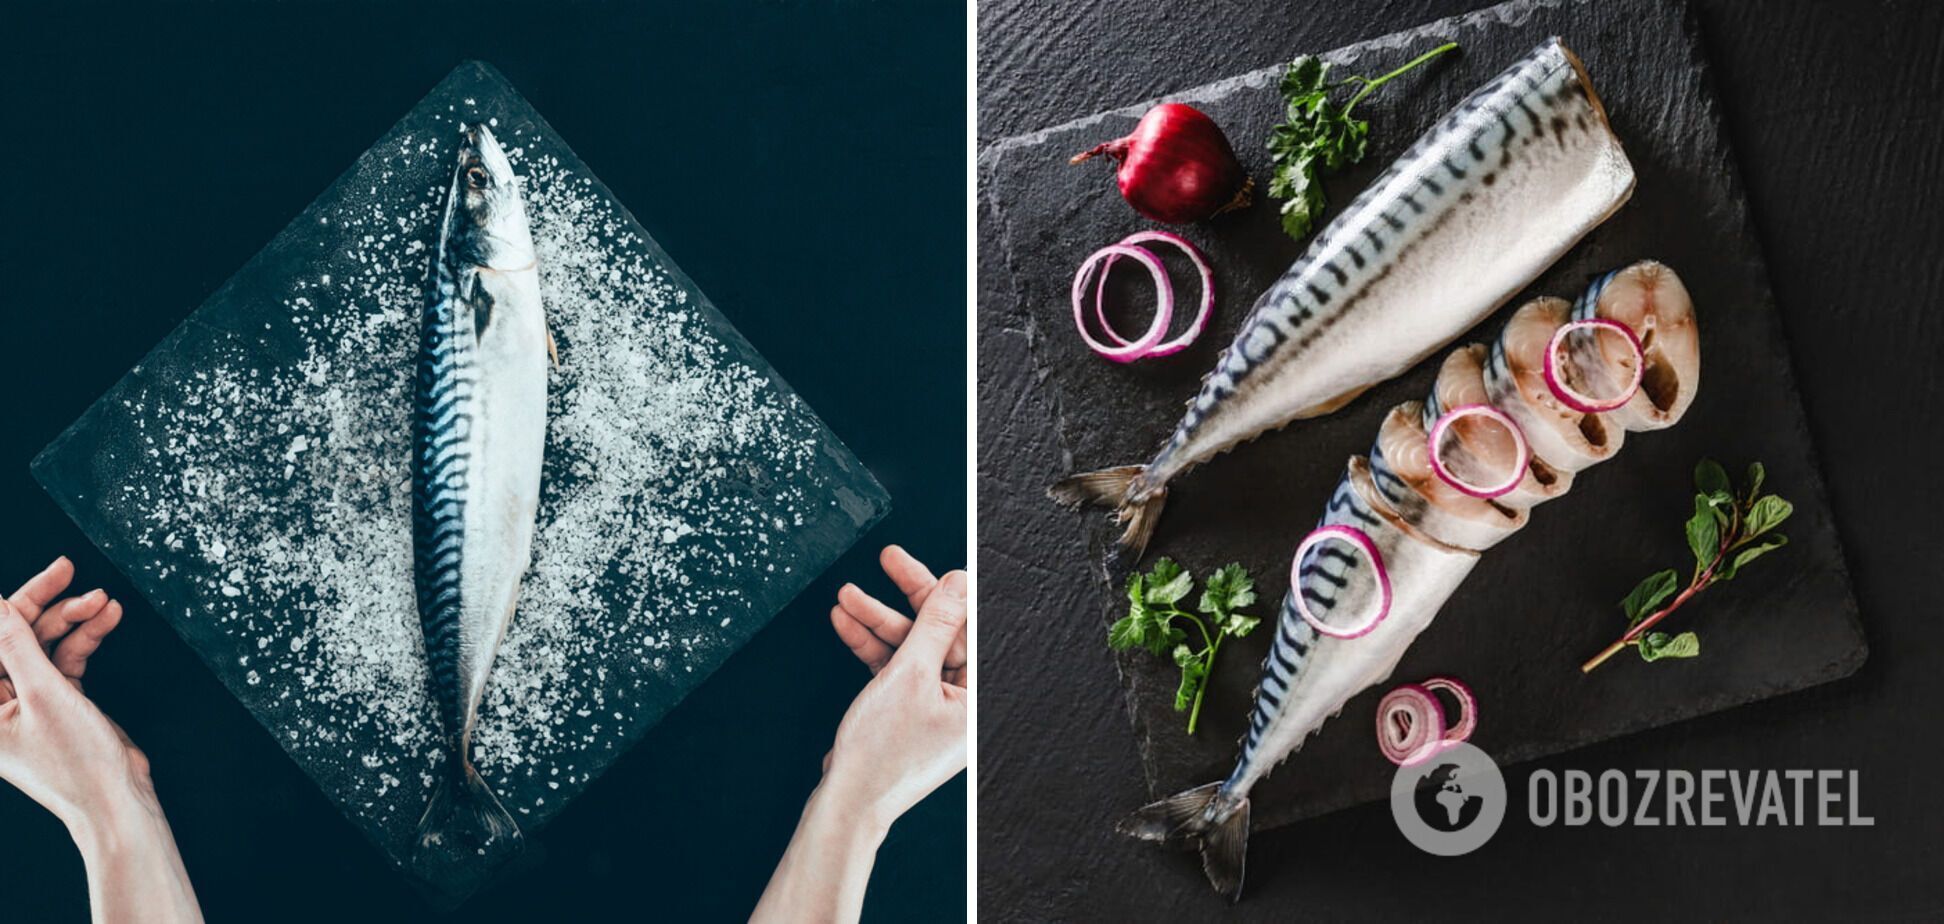 How to salt mackerel deliciously